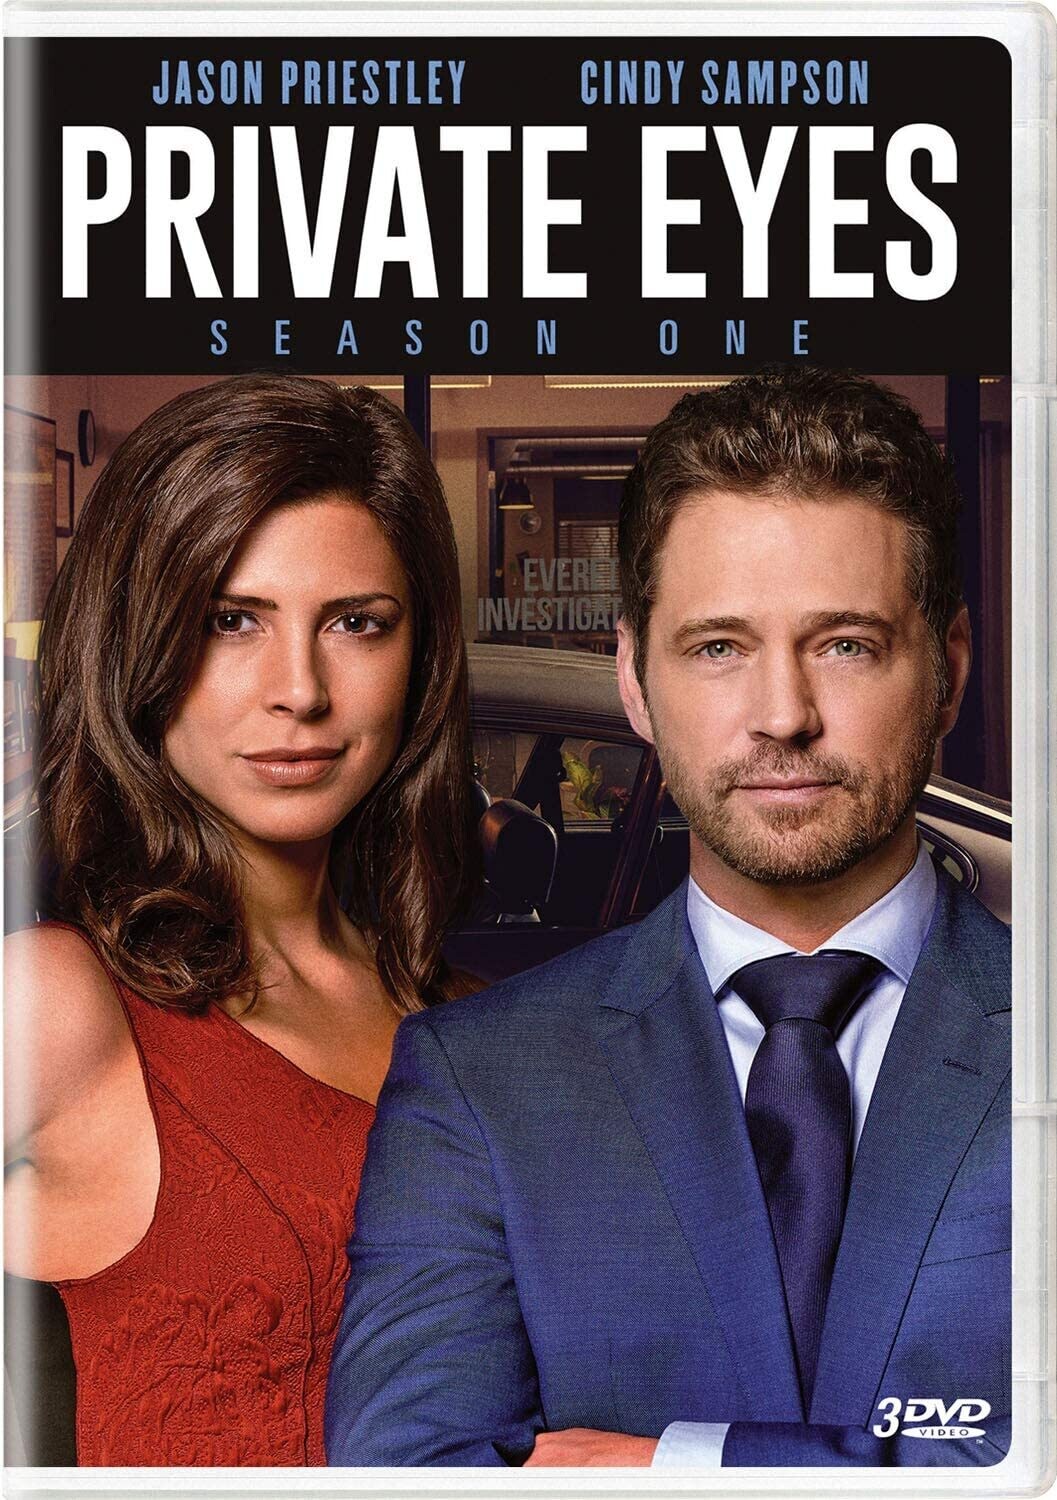 Private Eyes Season One (7 day rental)